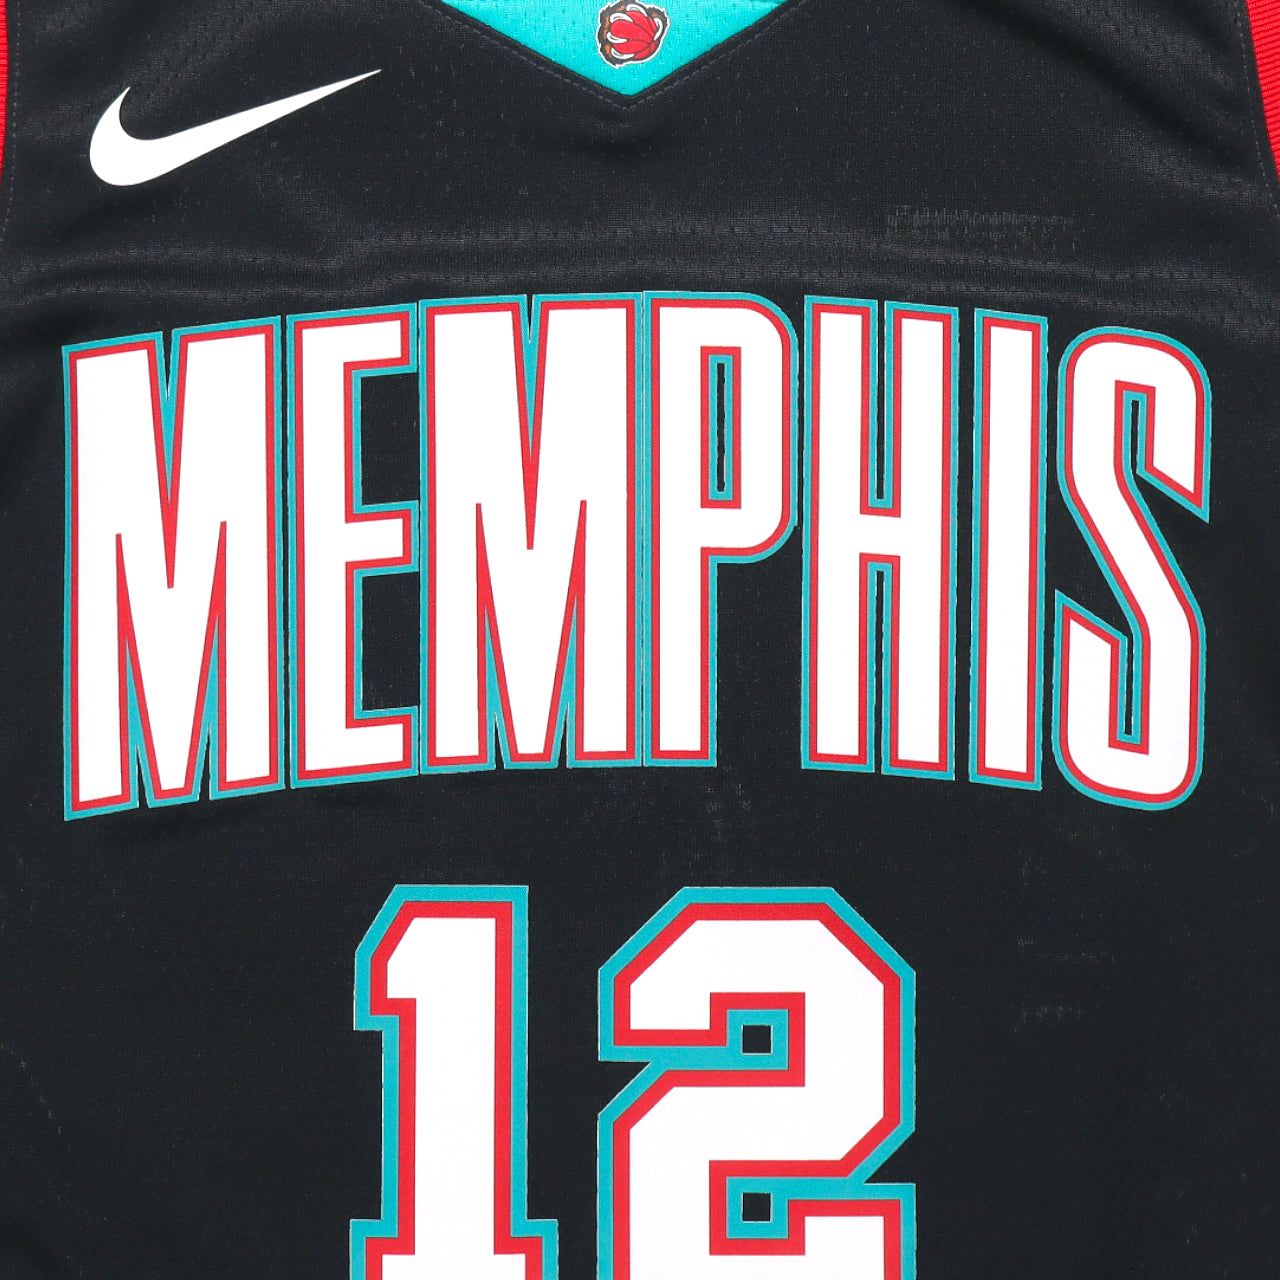 Ja Morant Memphis Grizzlies 2021-2022 Classic Edition Nike Swingman Jersey Black/Green - Hoop Jersey Store